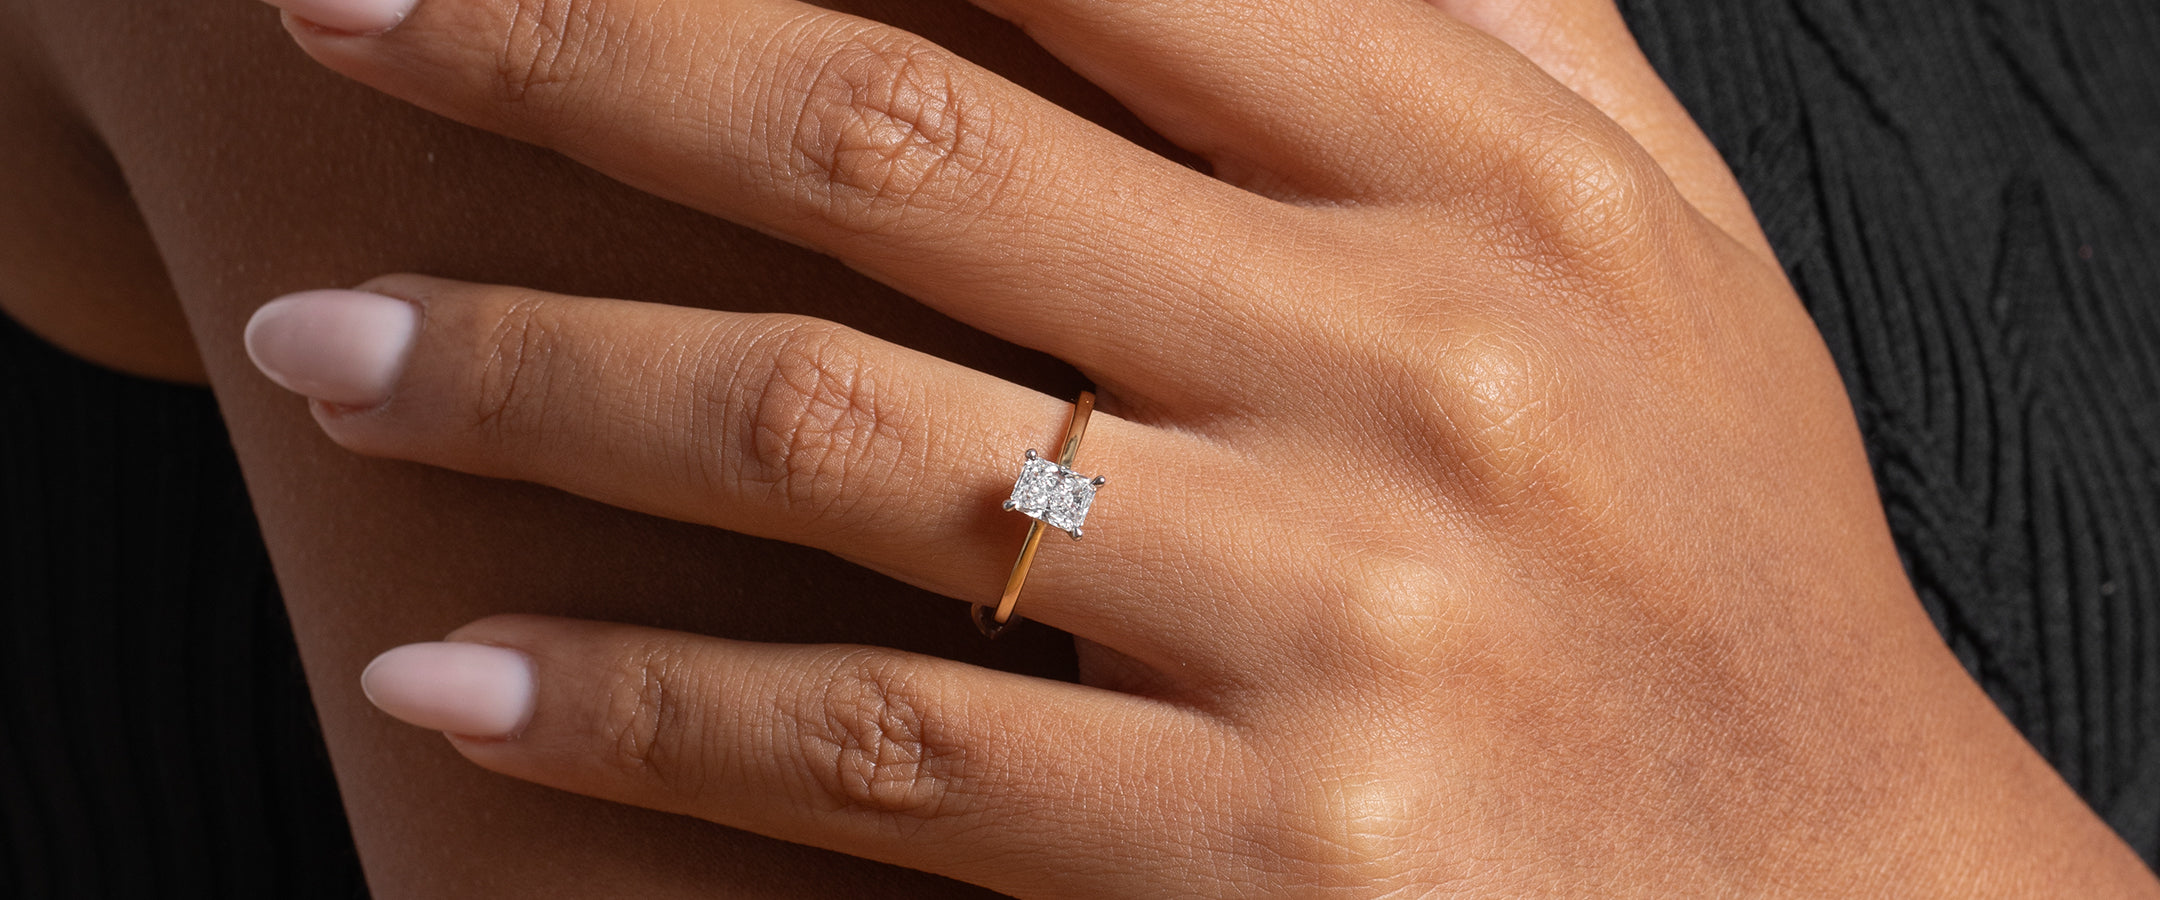 Diamonds, Engagement Rings & Jewelry Price Information